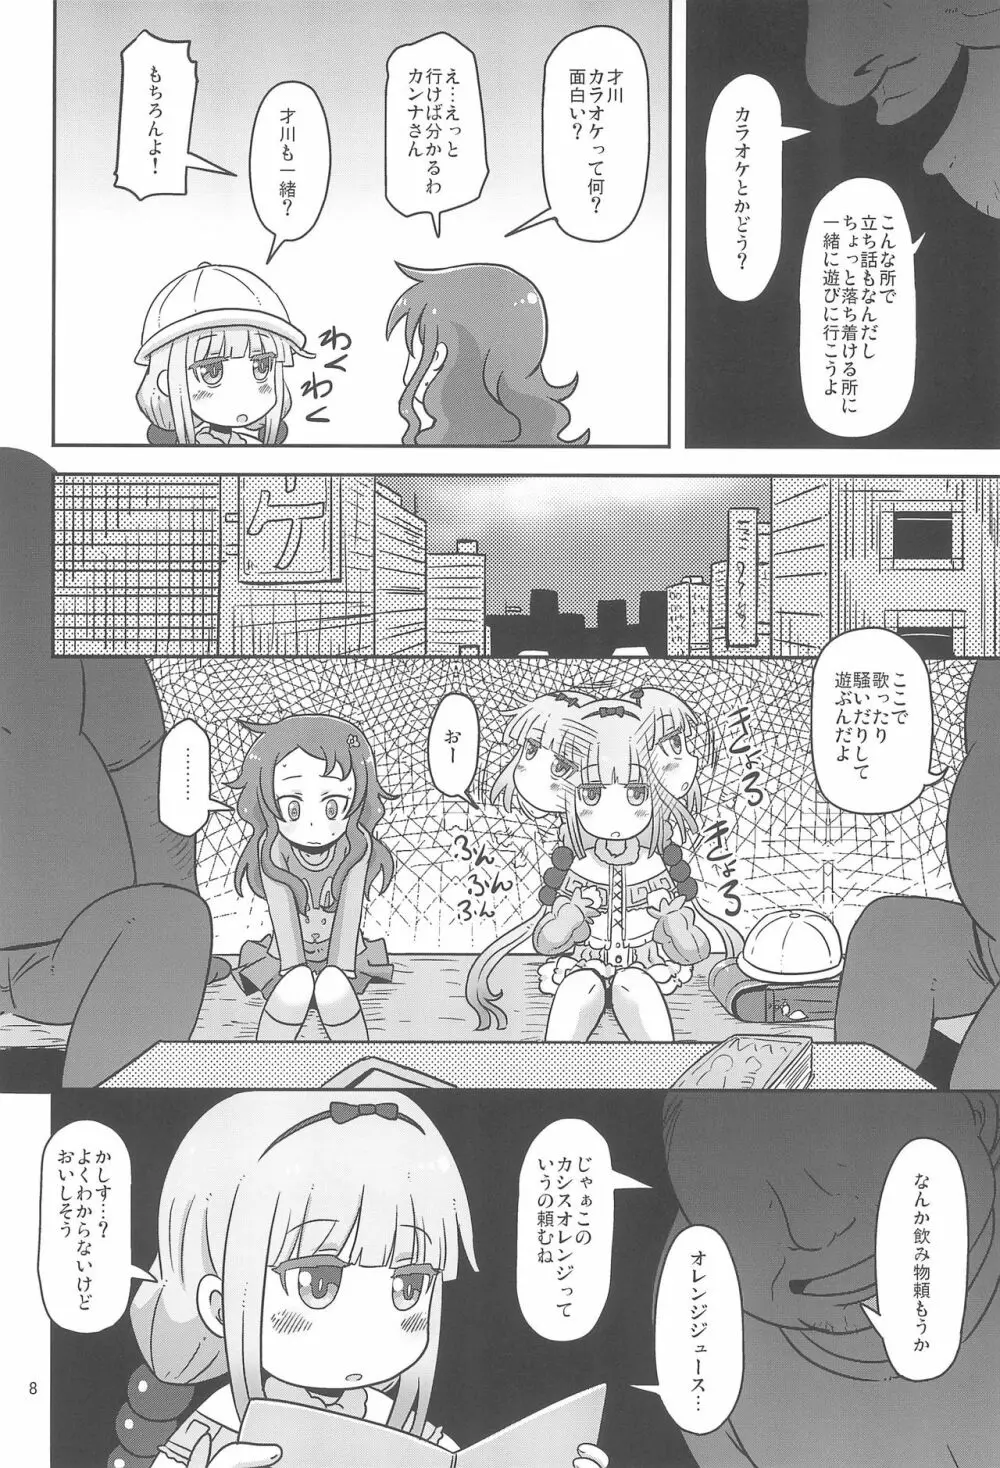 Dragonic Lolita Bomb! - page8